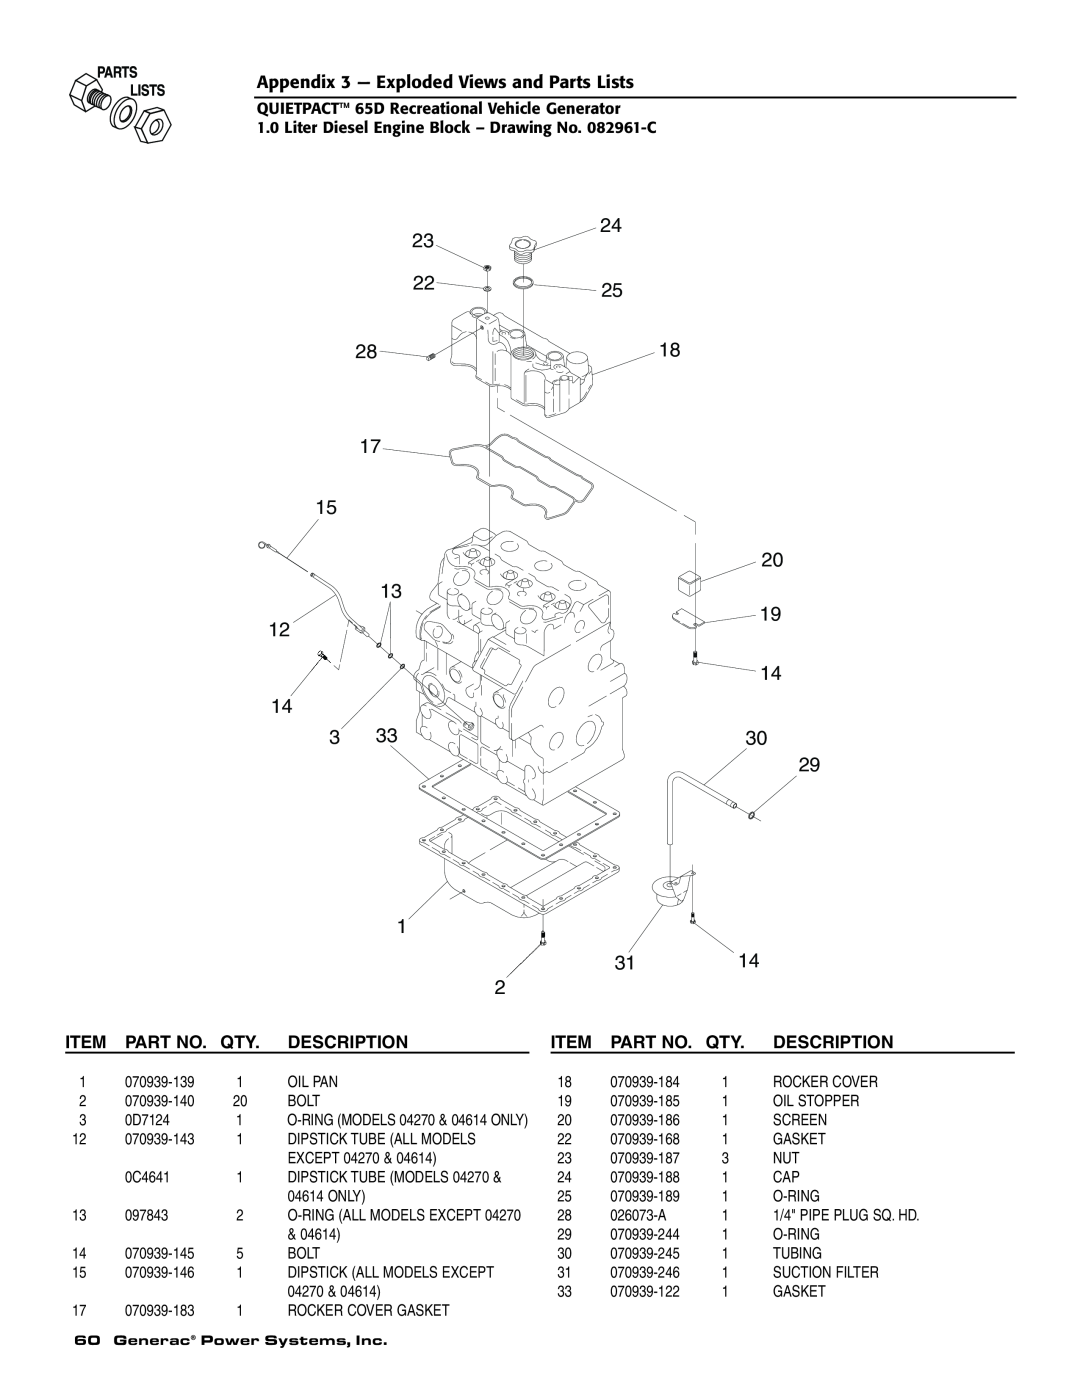 Generac 004614-1 owner manual 3114, Appendix 3 - Exploded Views and Parts Lists, Description, Dipstick Tube Models 